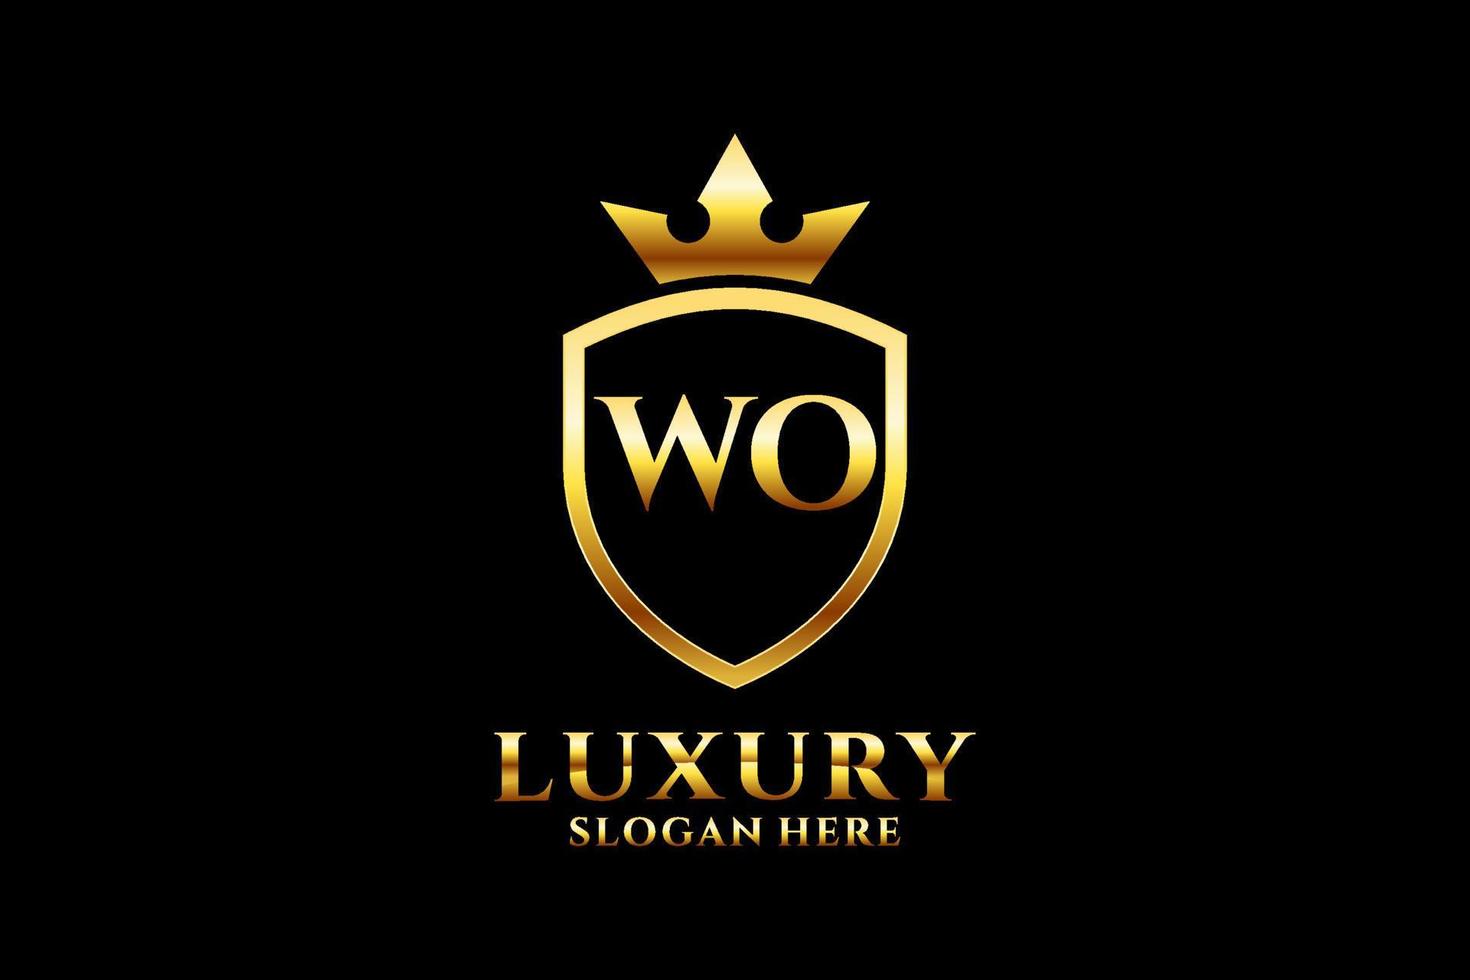 inicial wo elegante logotipo de monograma de luxo ou modelo de crachá com pergaminhos e coroa real - perfeito para projetos de marca luxuosos vetor